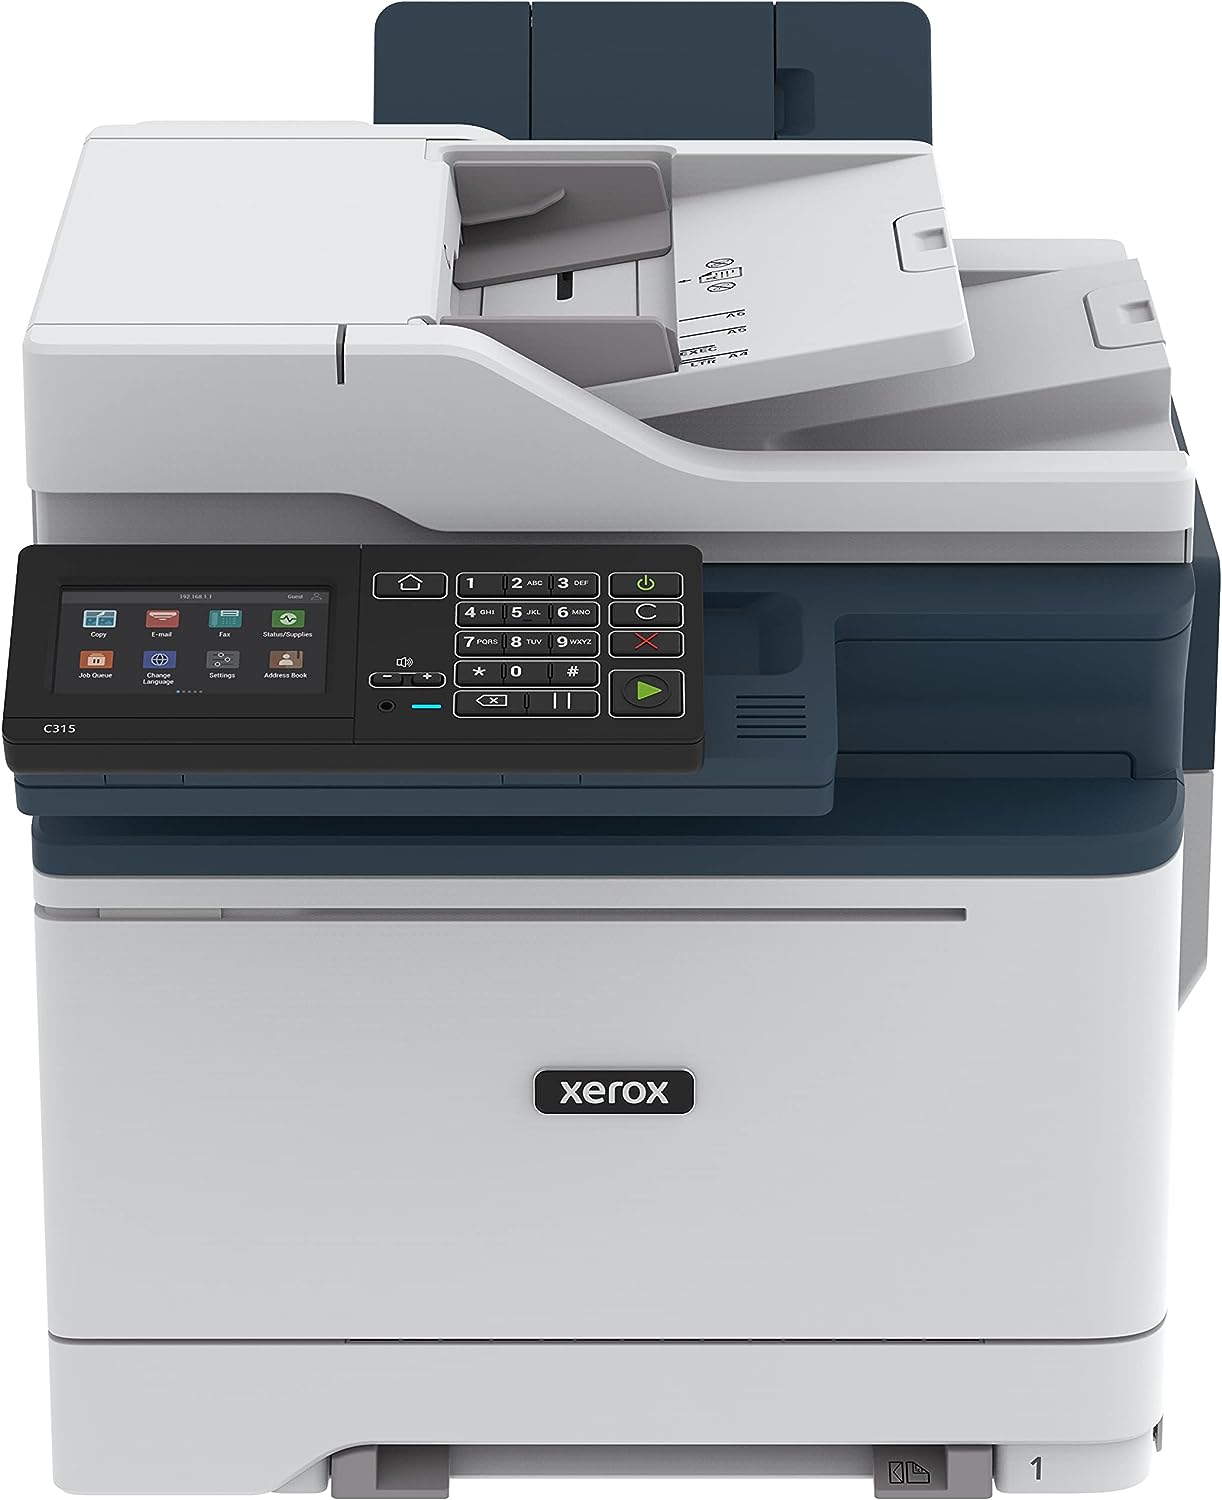 Xerox C315 Color Multifunction Printer, [...]